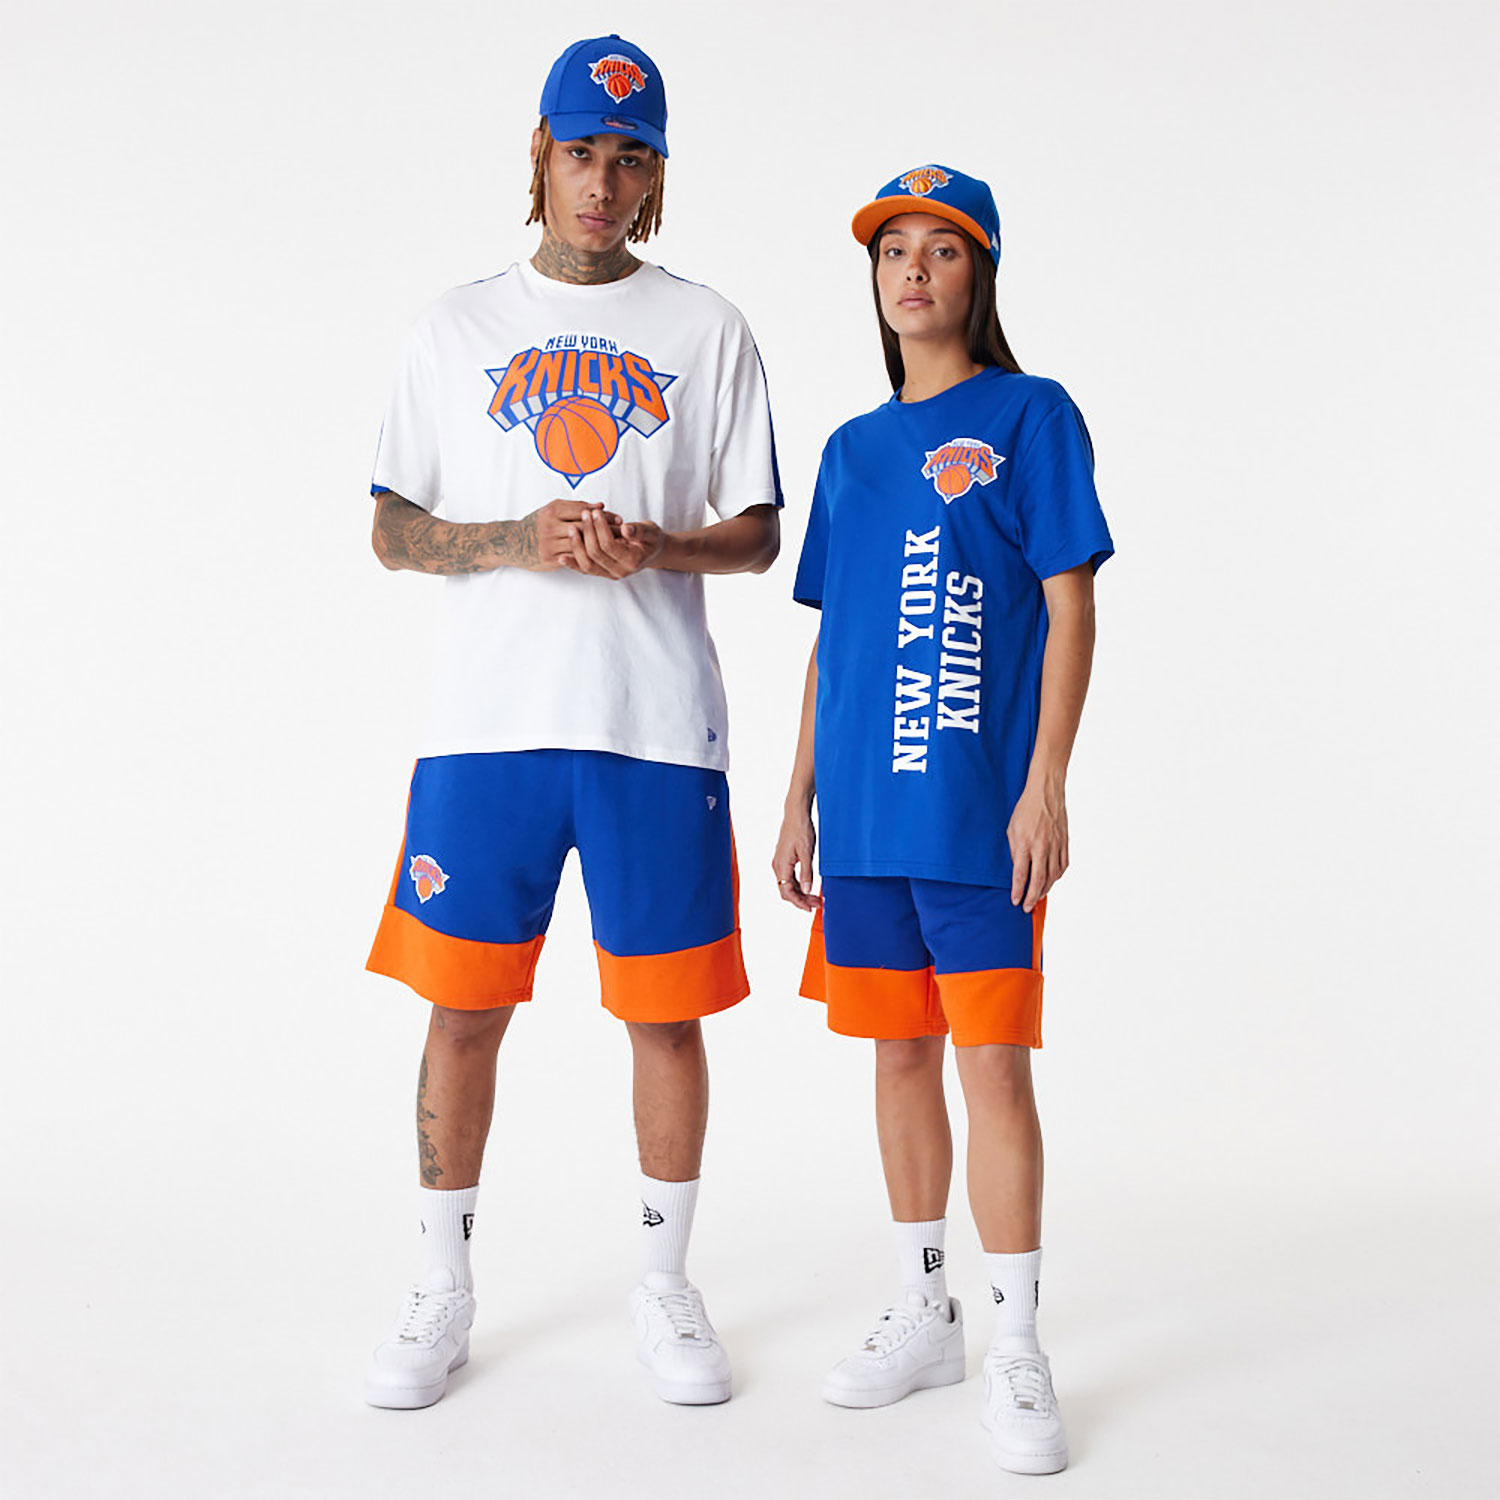 new york knicks nba shorts